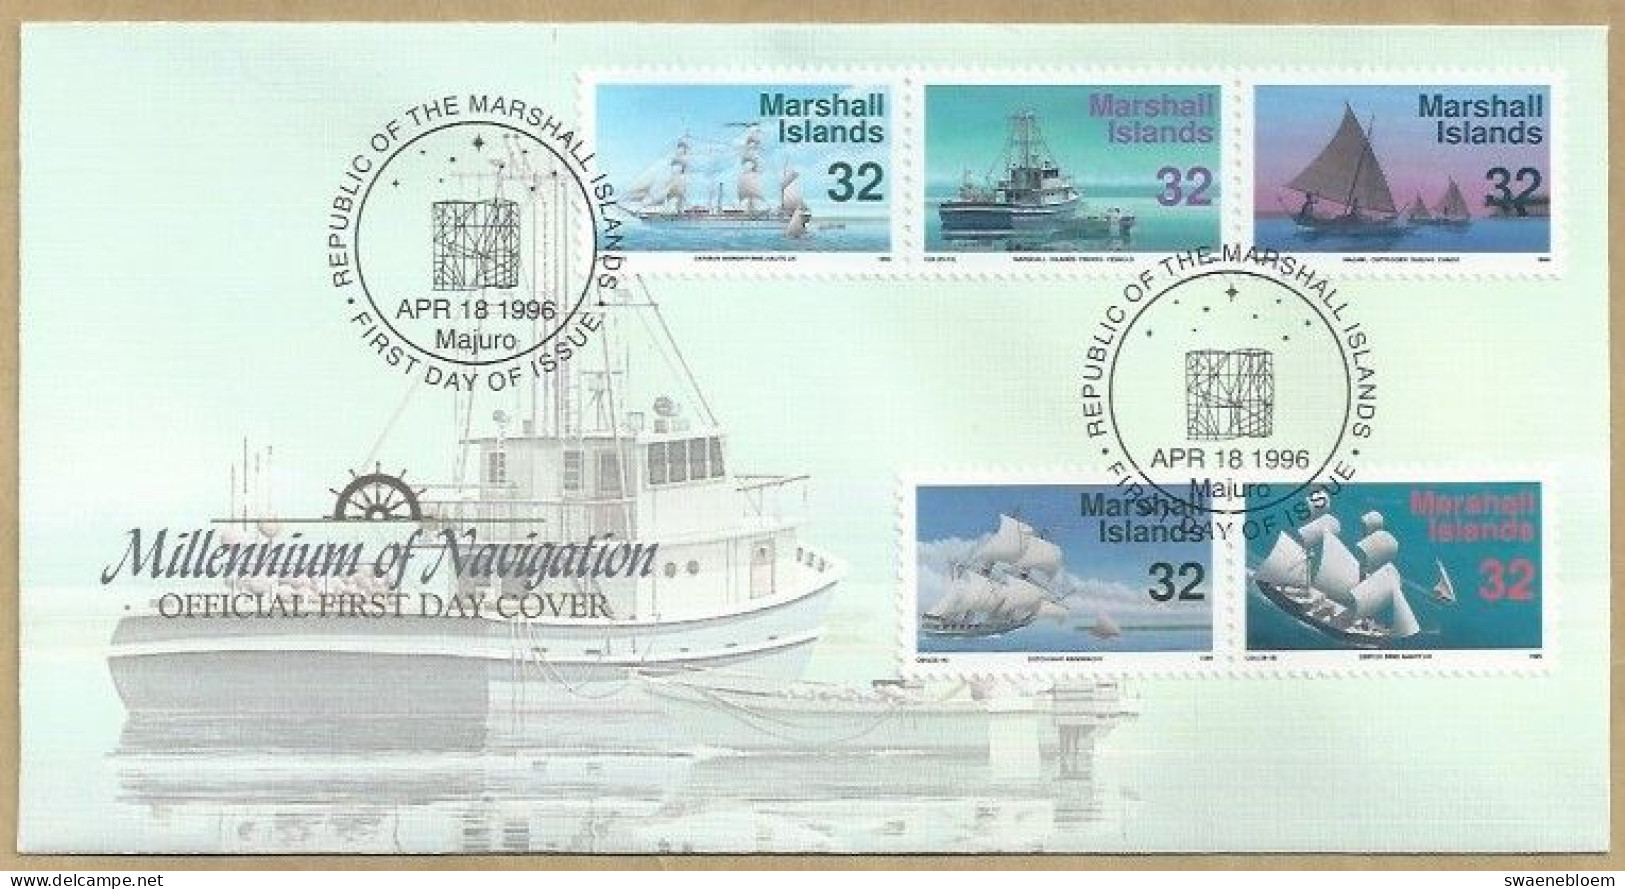 FDC. REPUBLIC OF THE MARSHALL ISLANDS. APR 18 1996 MAJURO. MILLENNIUM OF NAVIGATION. C94.FDC. (3). - Marshall Islands